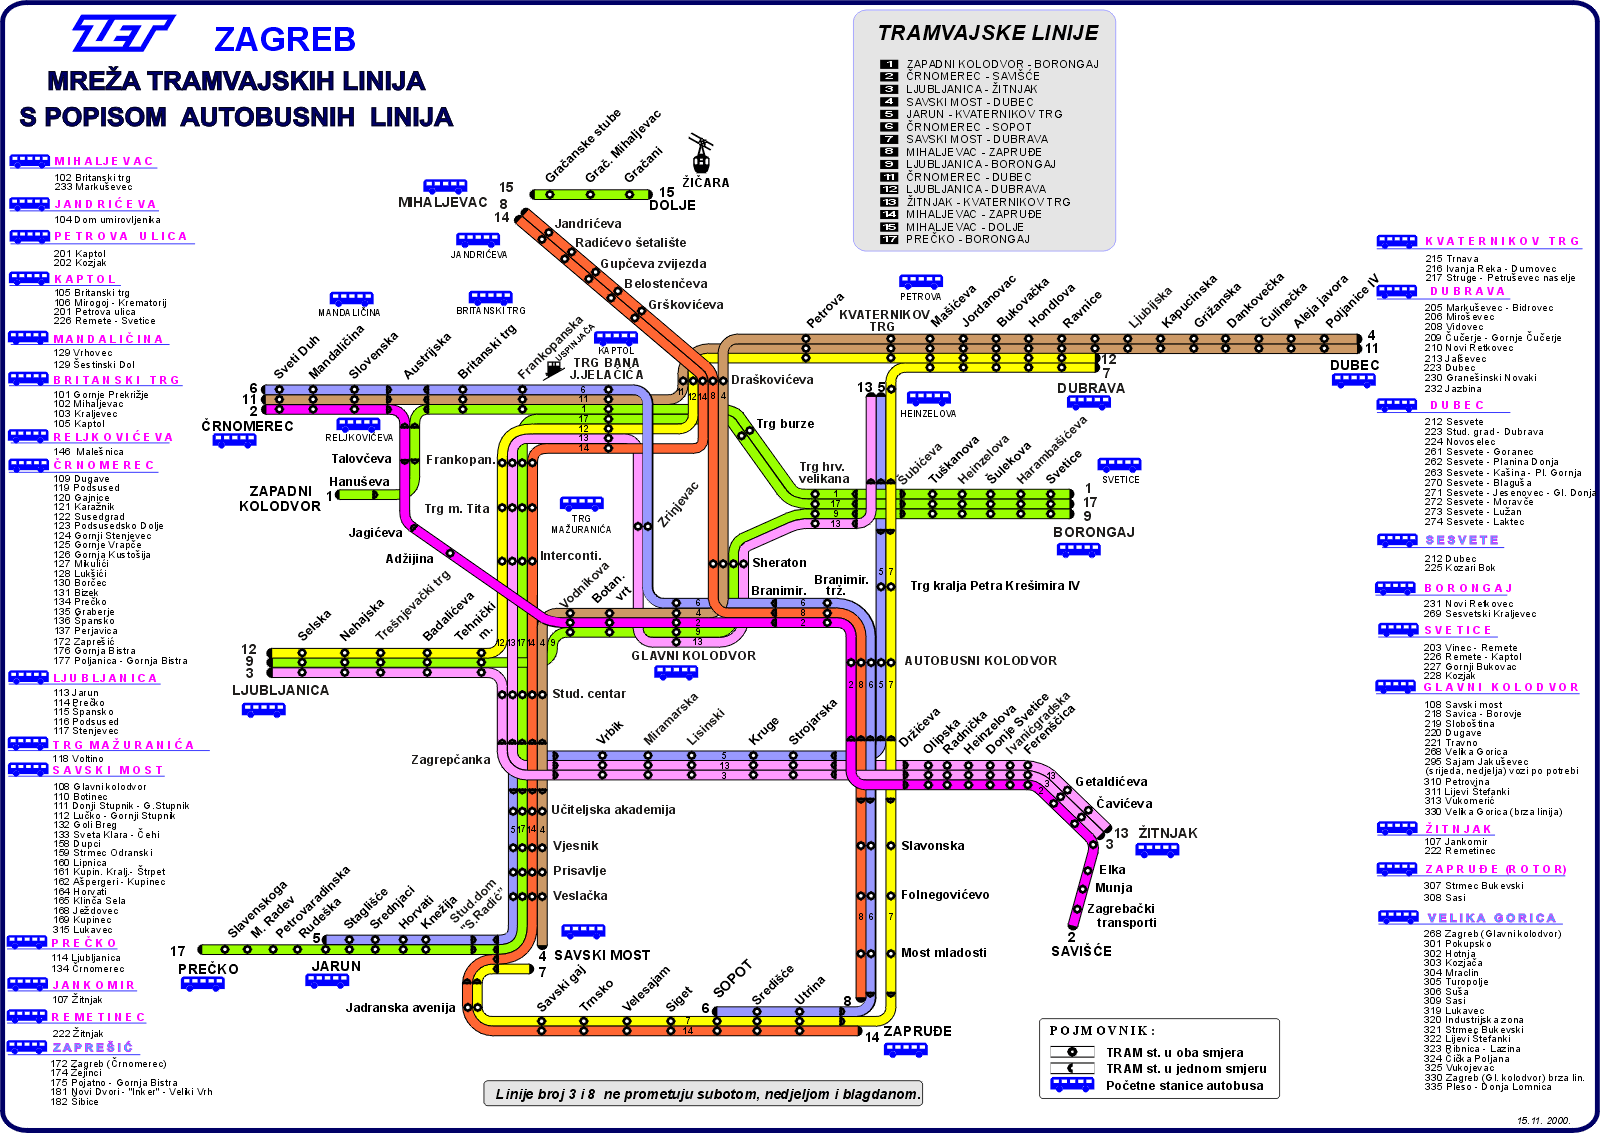 Metro area tram, bus, light rail, and rail system maps